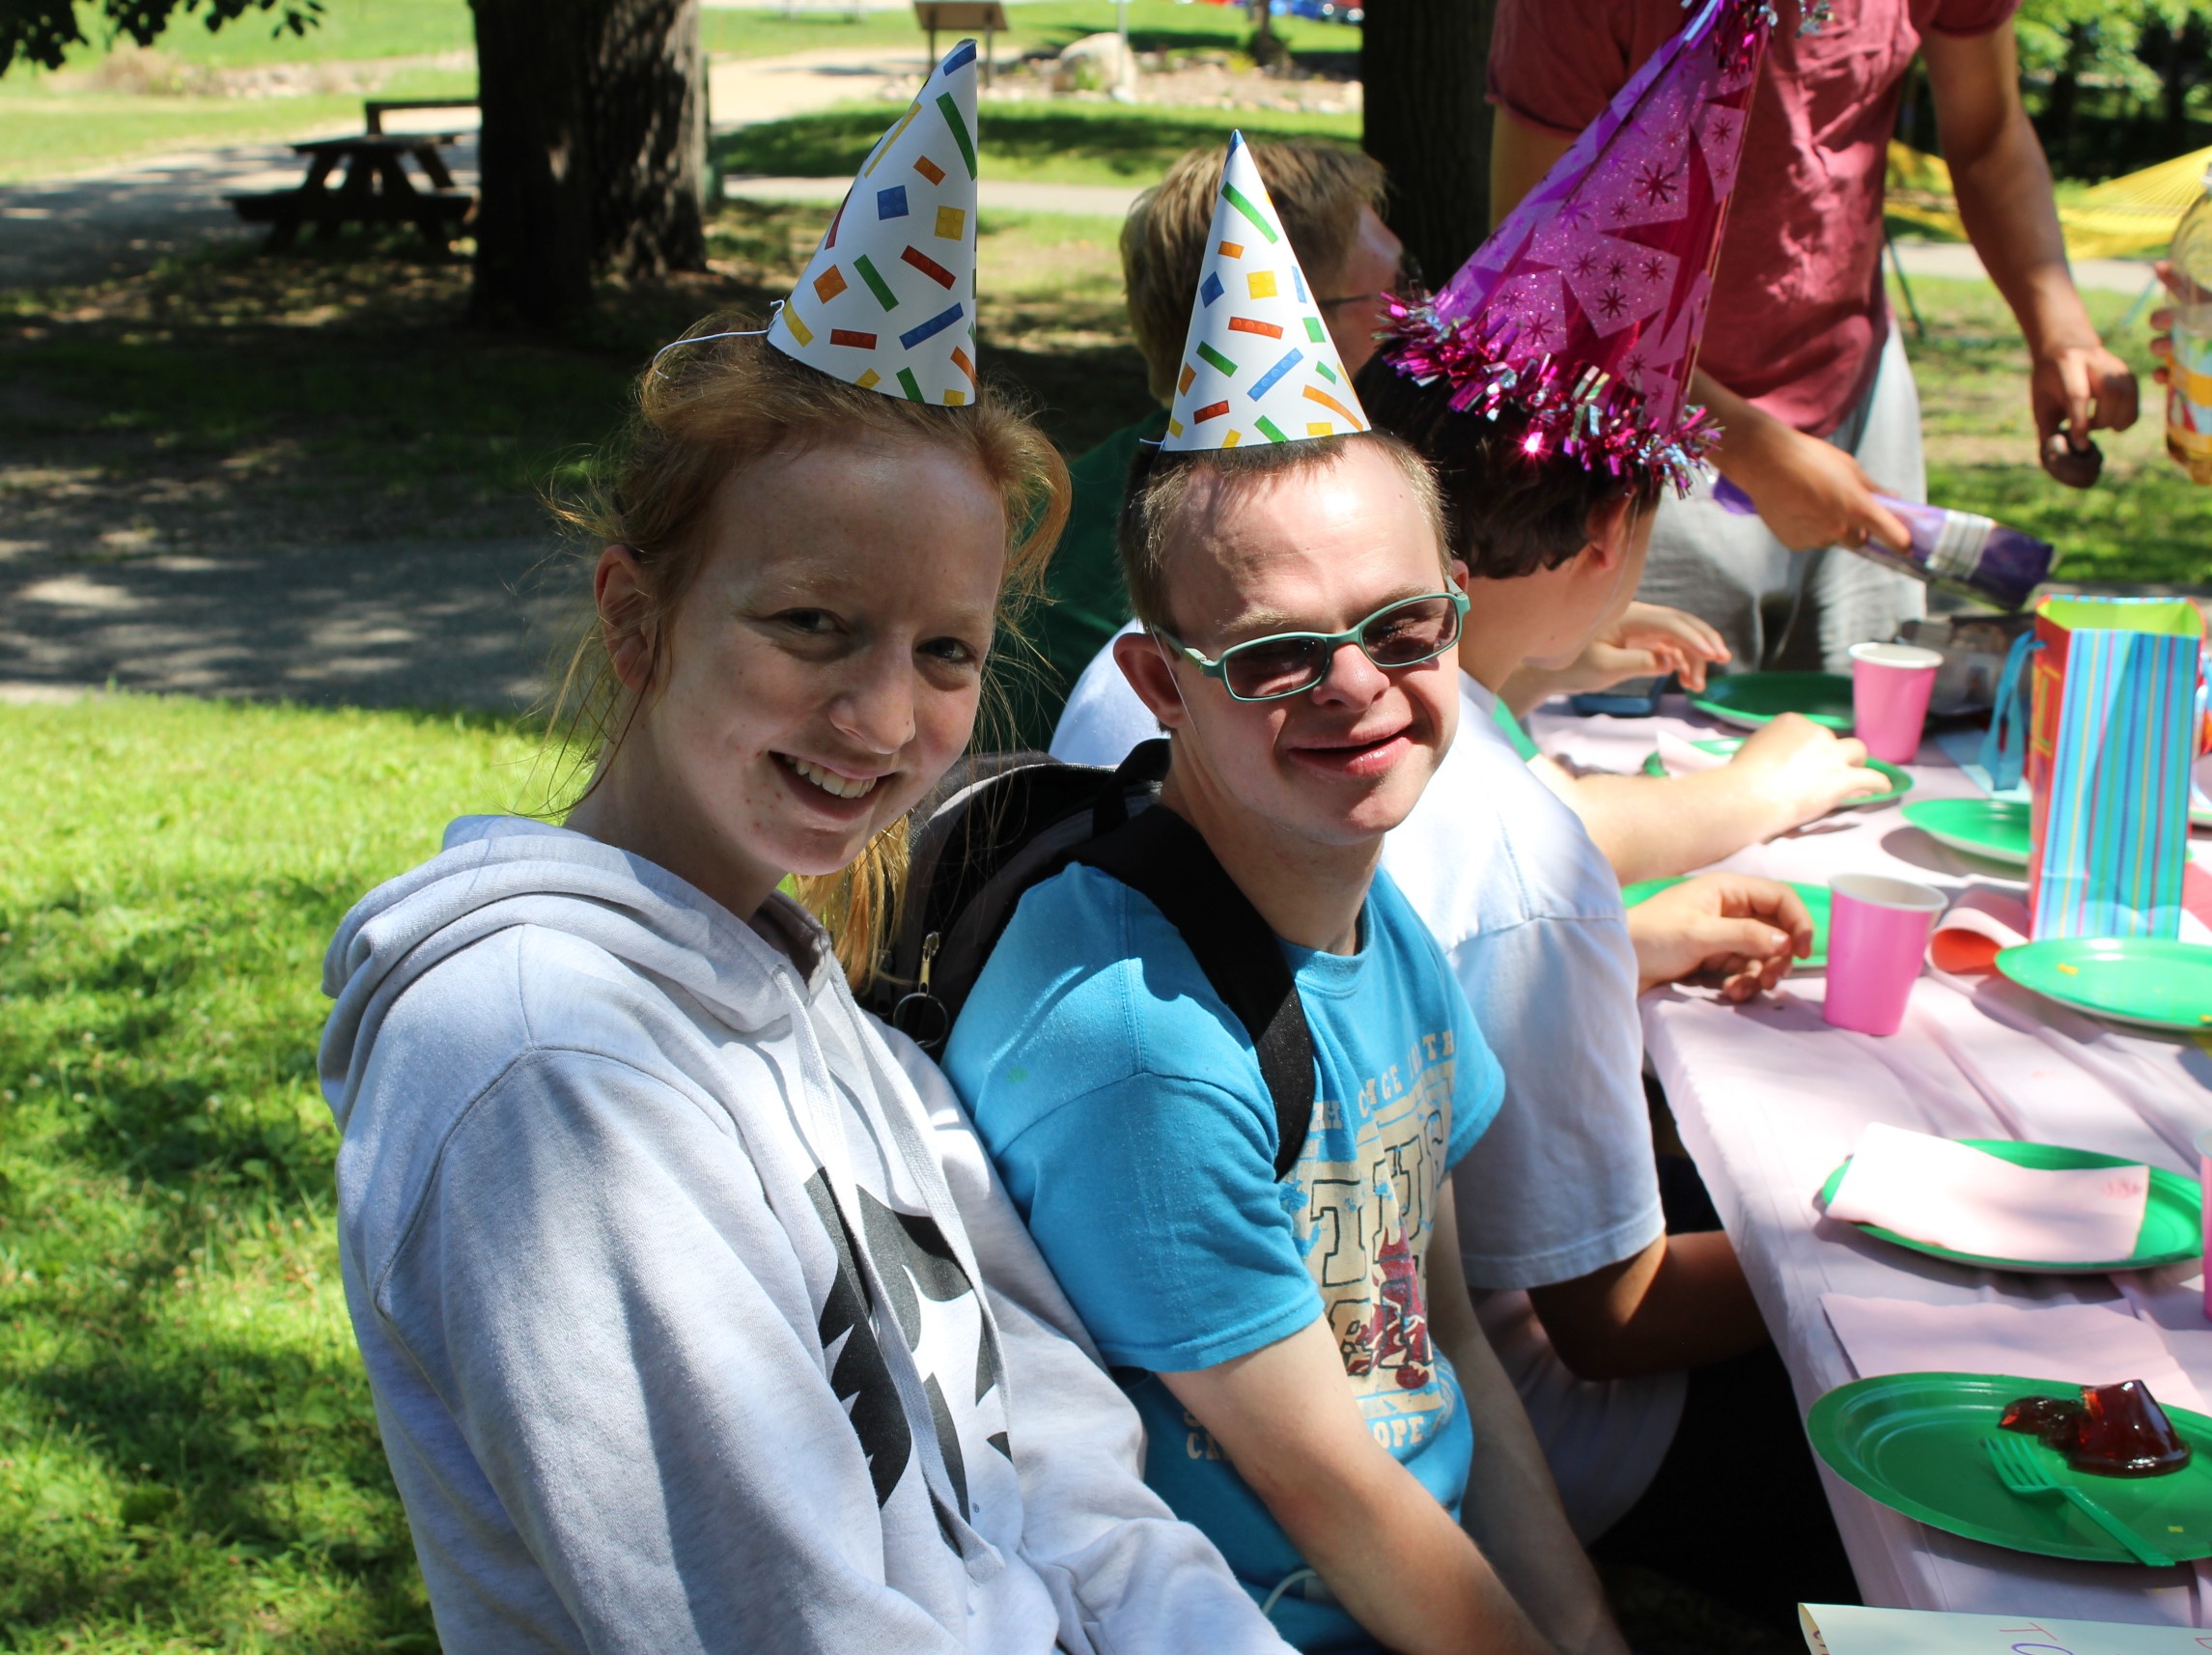 A camper's birthday celebration at camp!